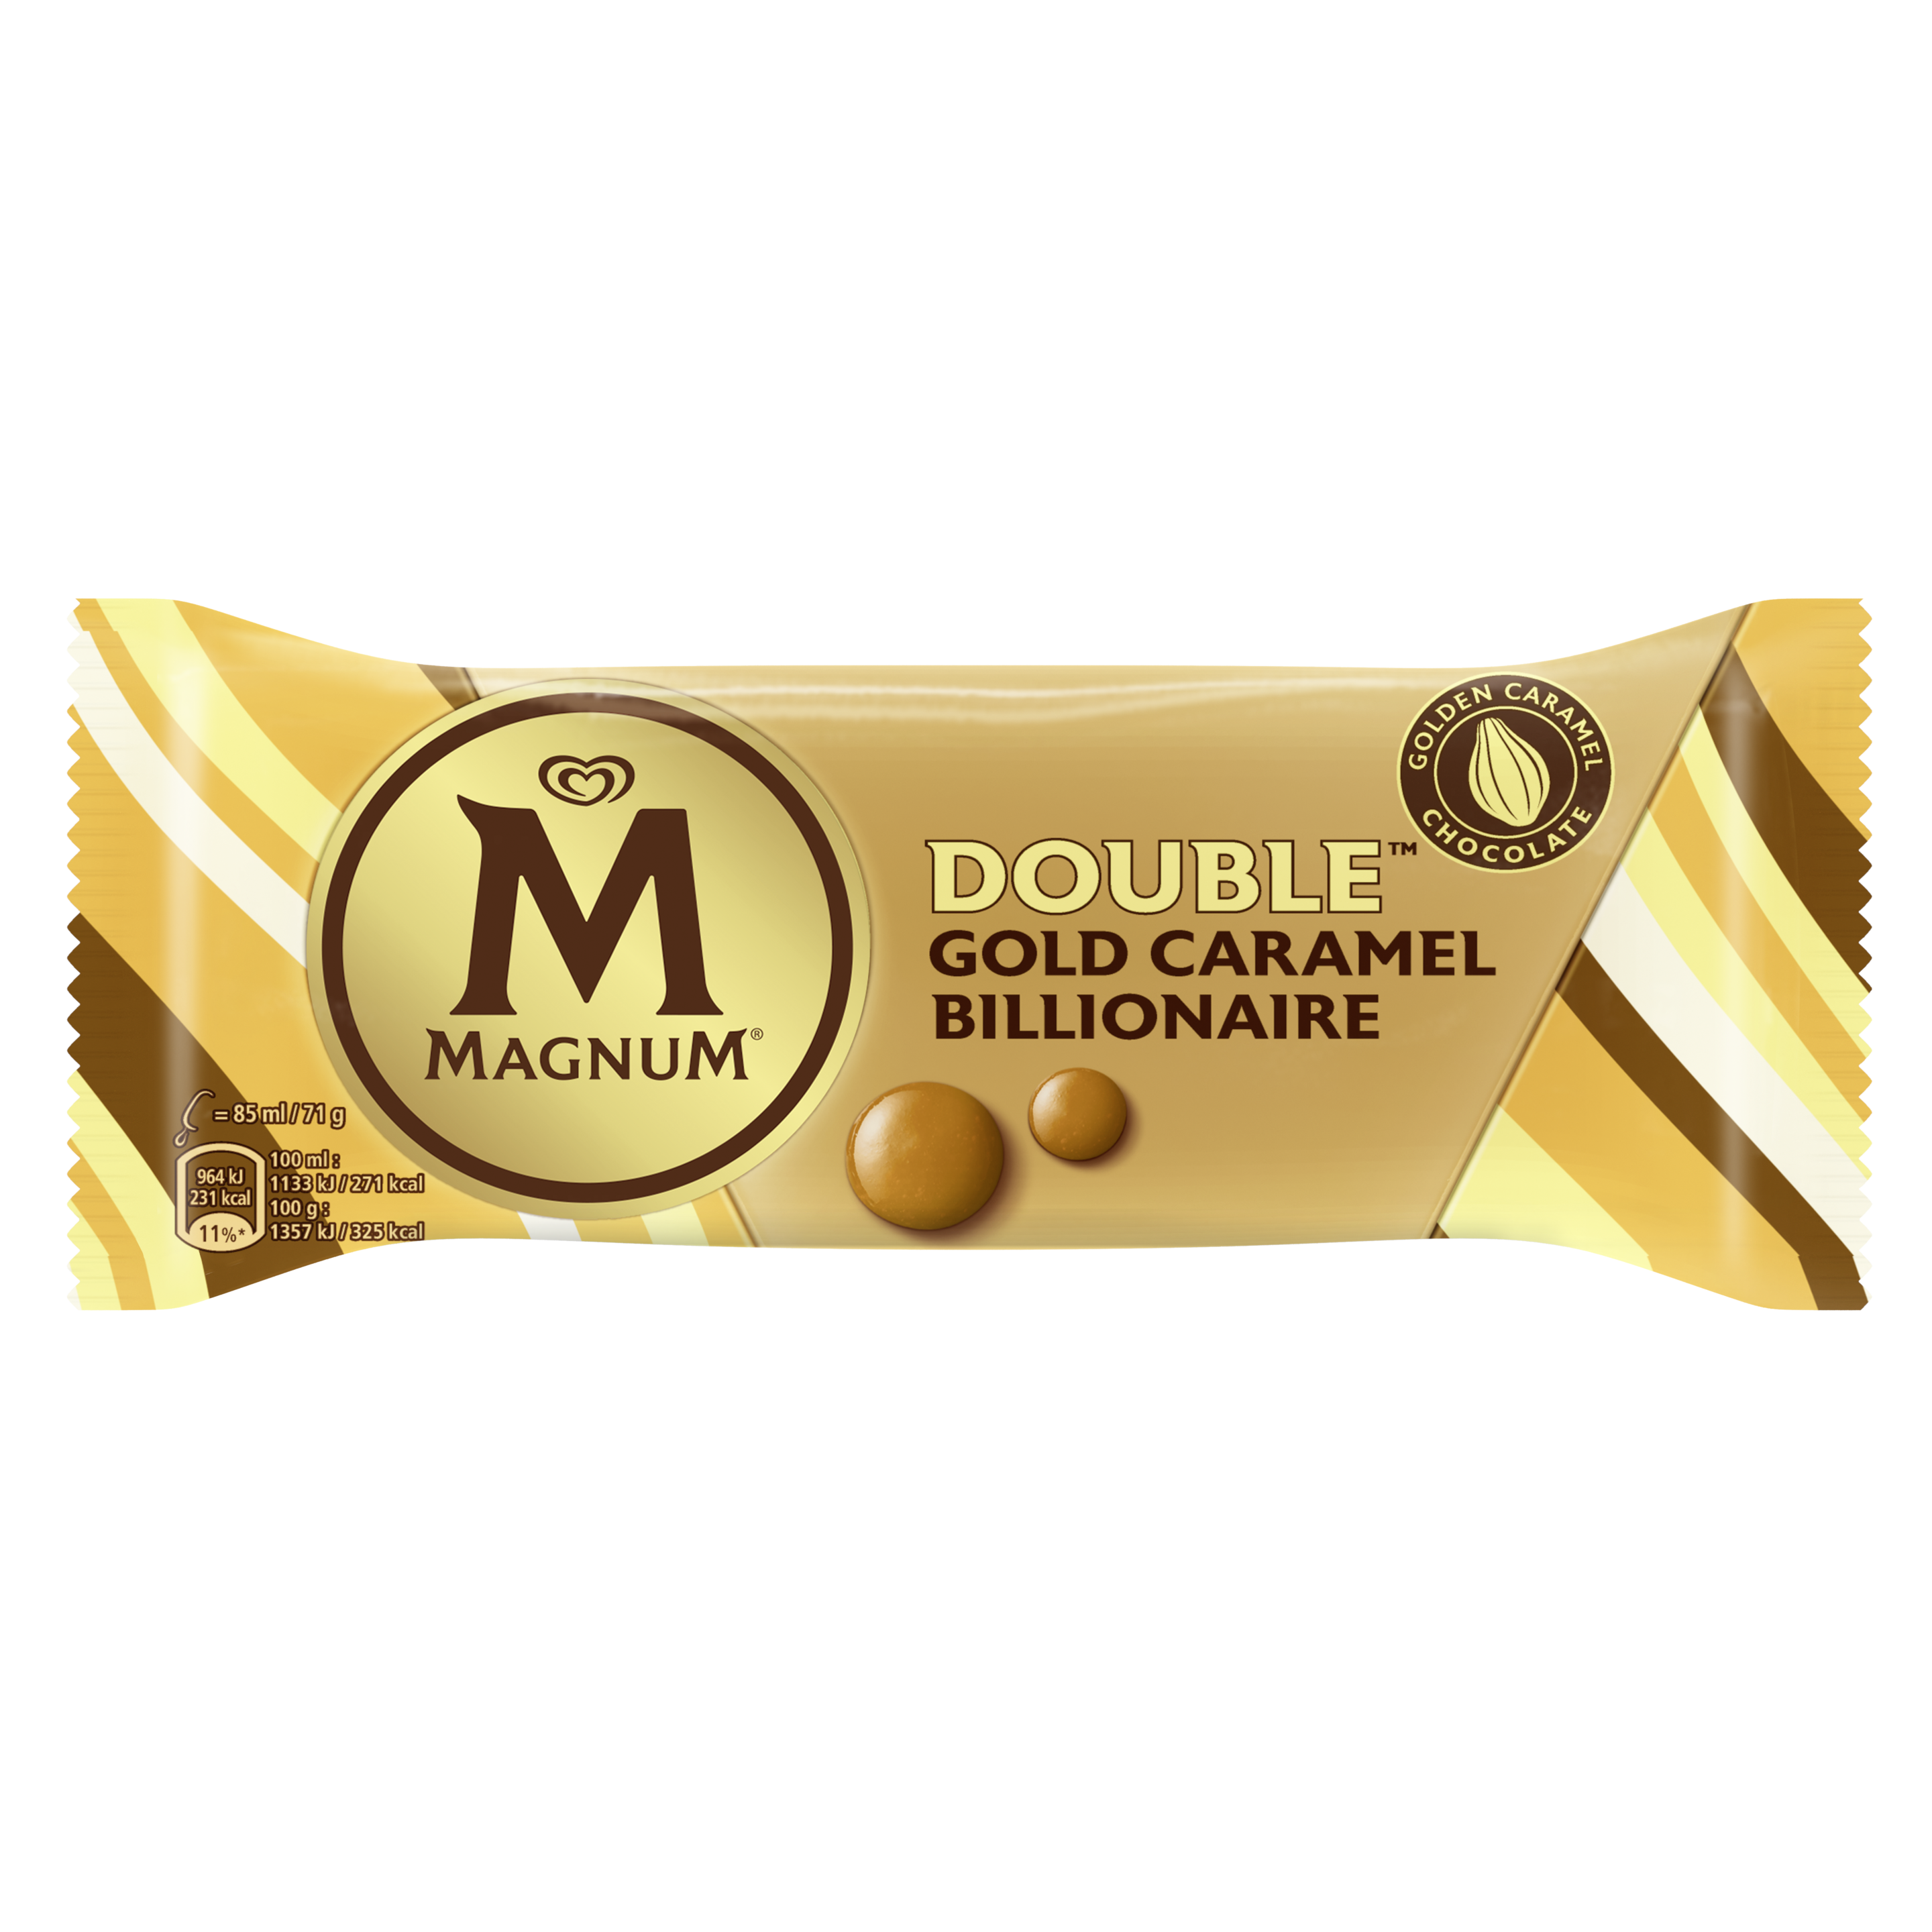 Magnum DOUBLE Caramel Gold Billionaire 85ml